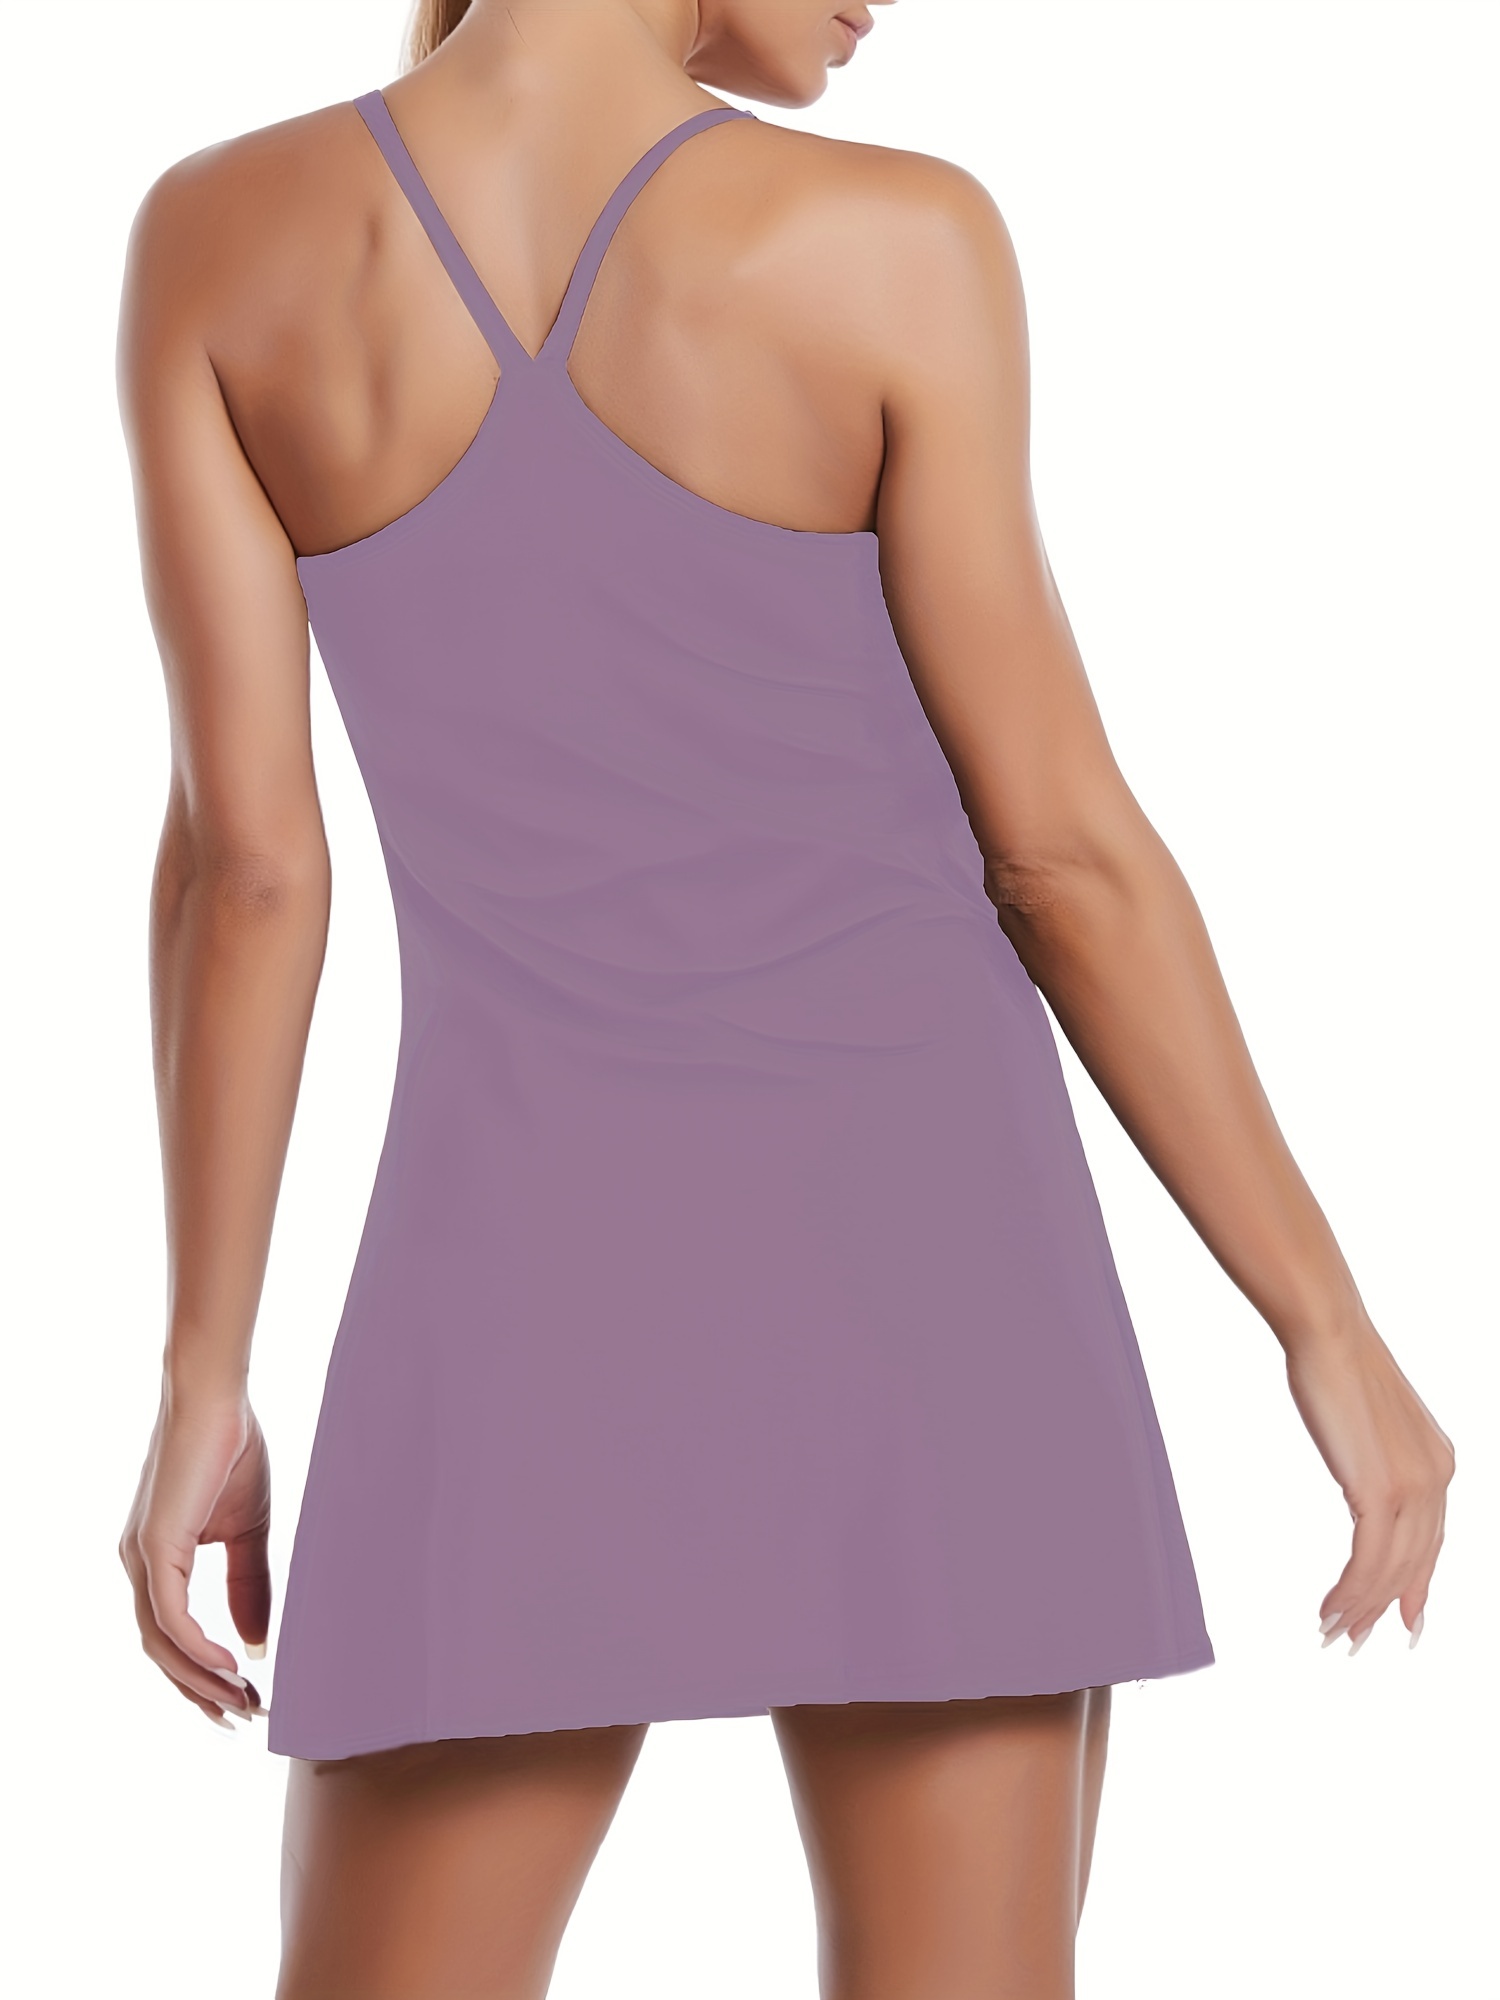 TNALIFE™ SURPASS DRESS - Racerback tennis dress with built-in bra